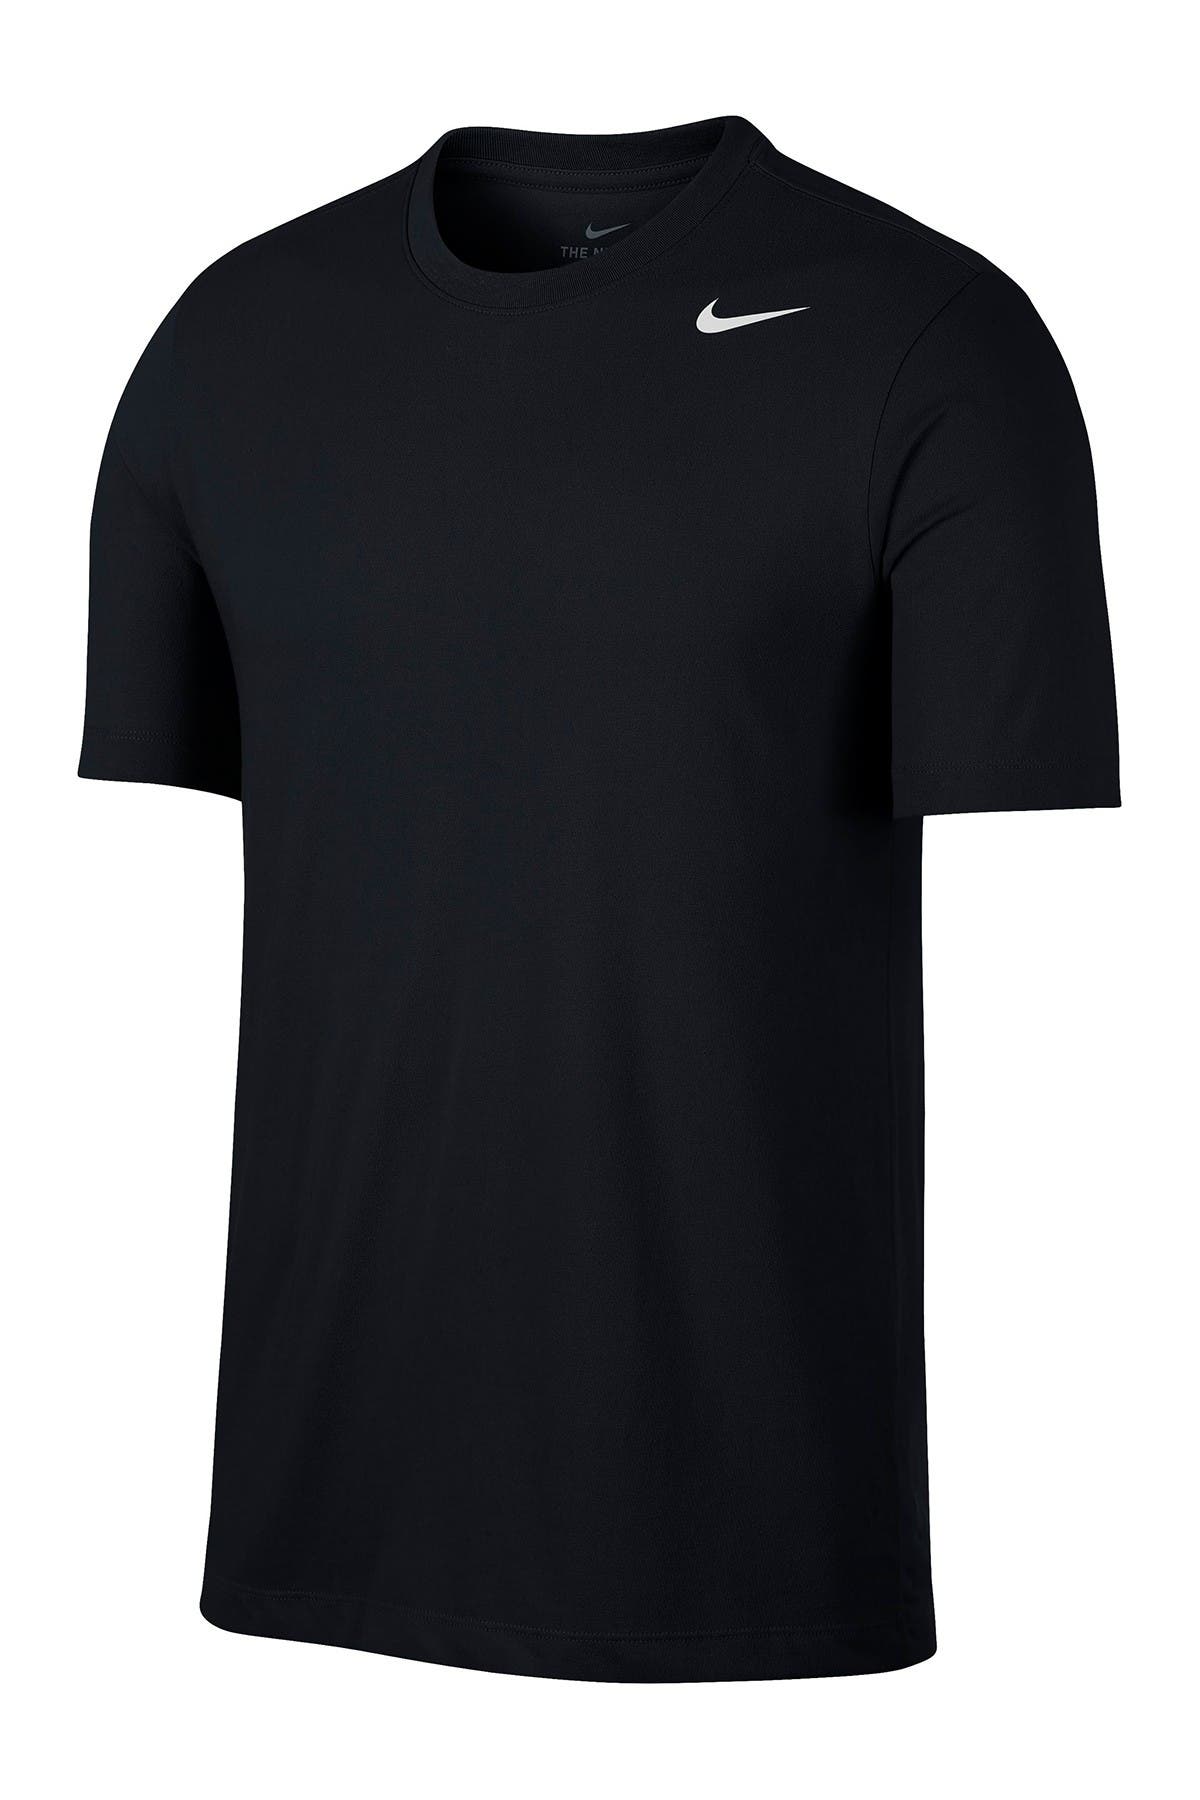 athletic brand t shirts